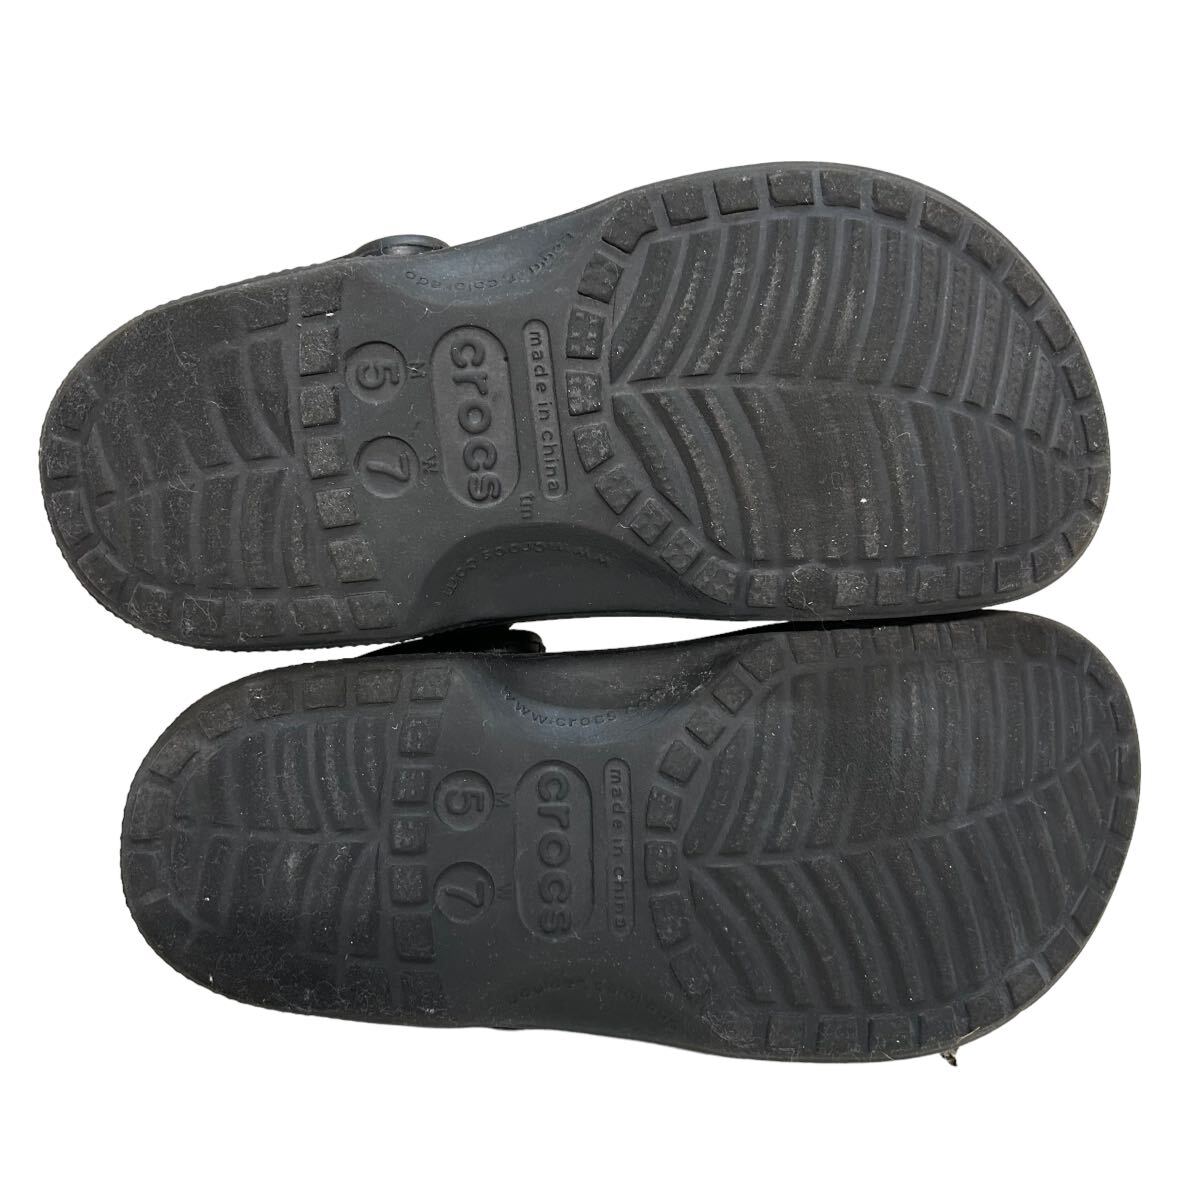 A163 crocs Crocs для мужчин и женщин сандалии M5 W7 примерно 23cm Black Raver 